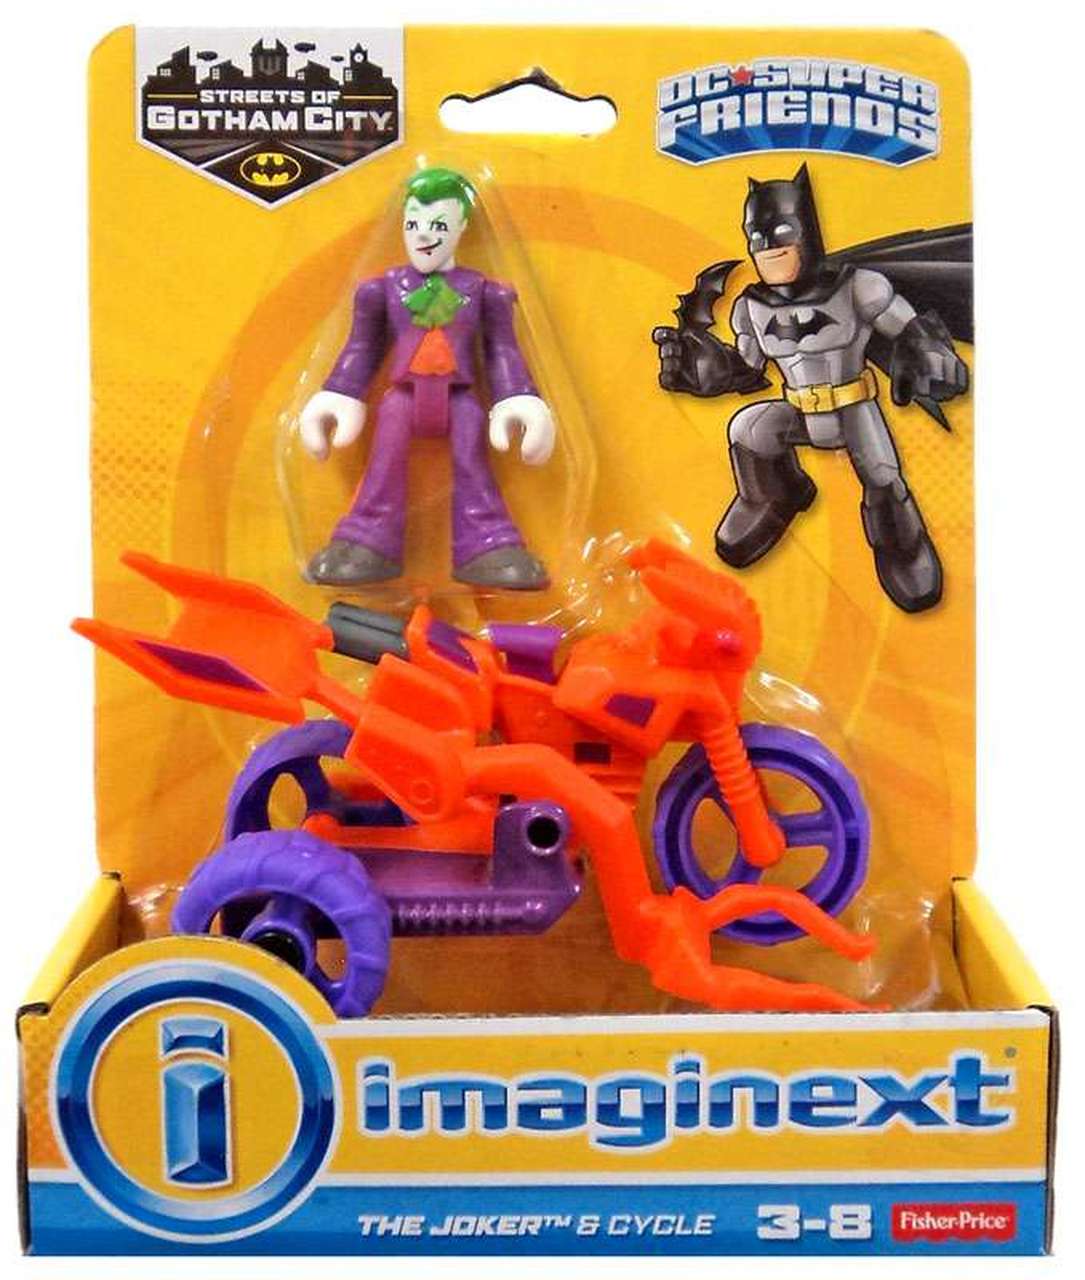 Lolli recommend best of toys Imaginext joker